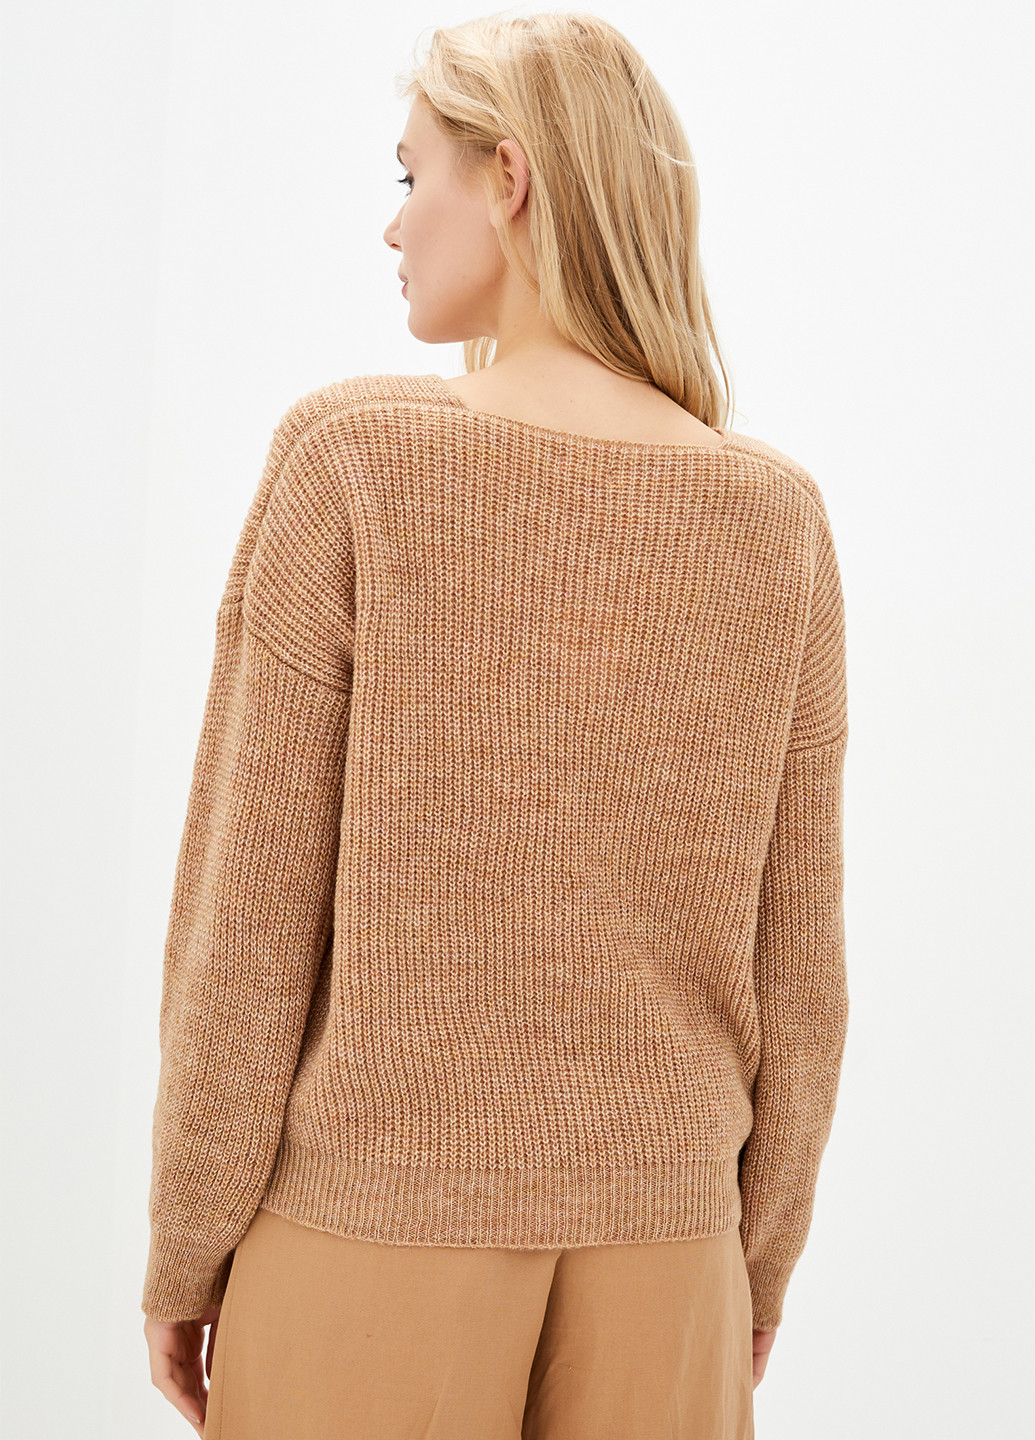 Бежевый демисезонный пуловер пуловер Sewel